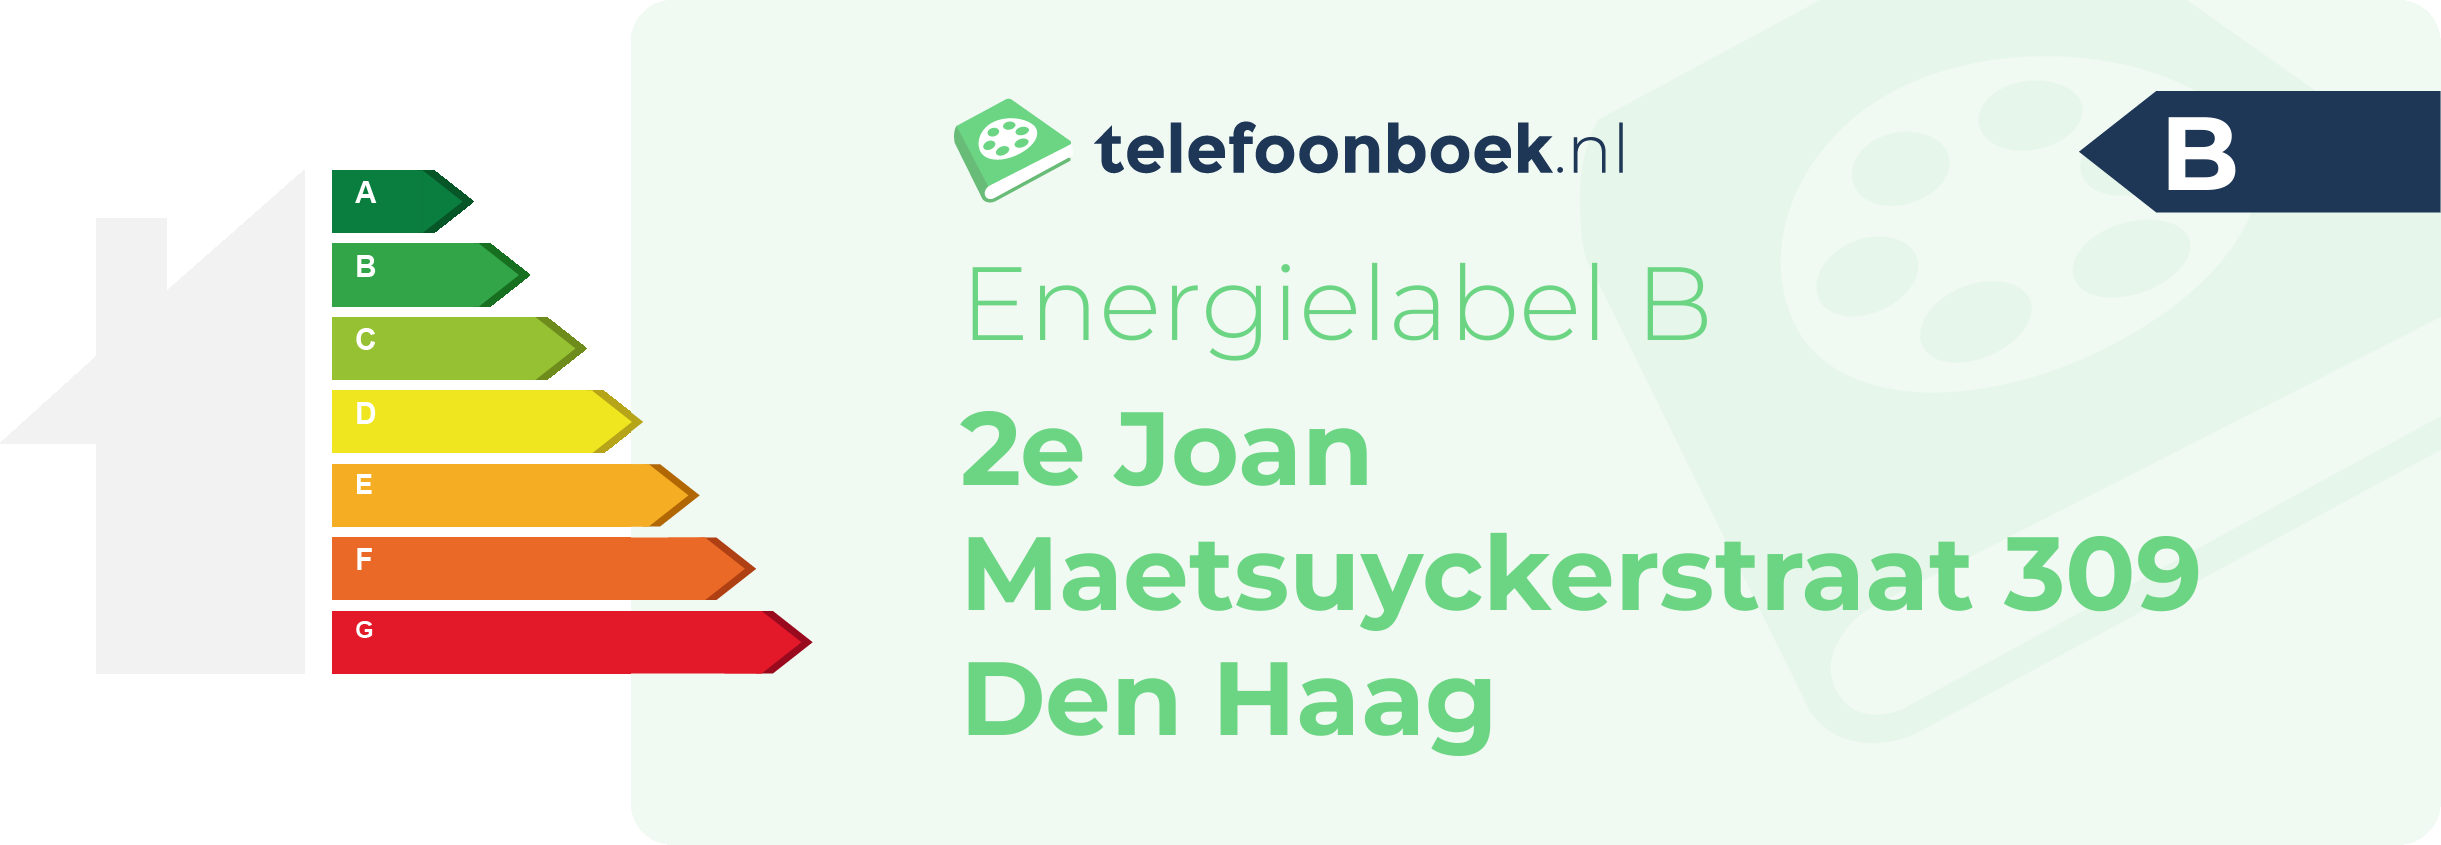 Energielabel 2e Joan Maetsuyckerstraat 309 Den Haag